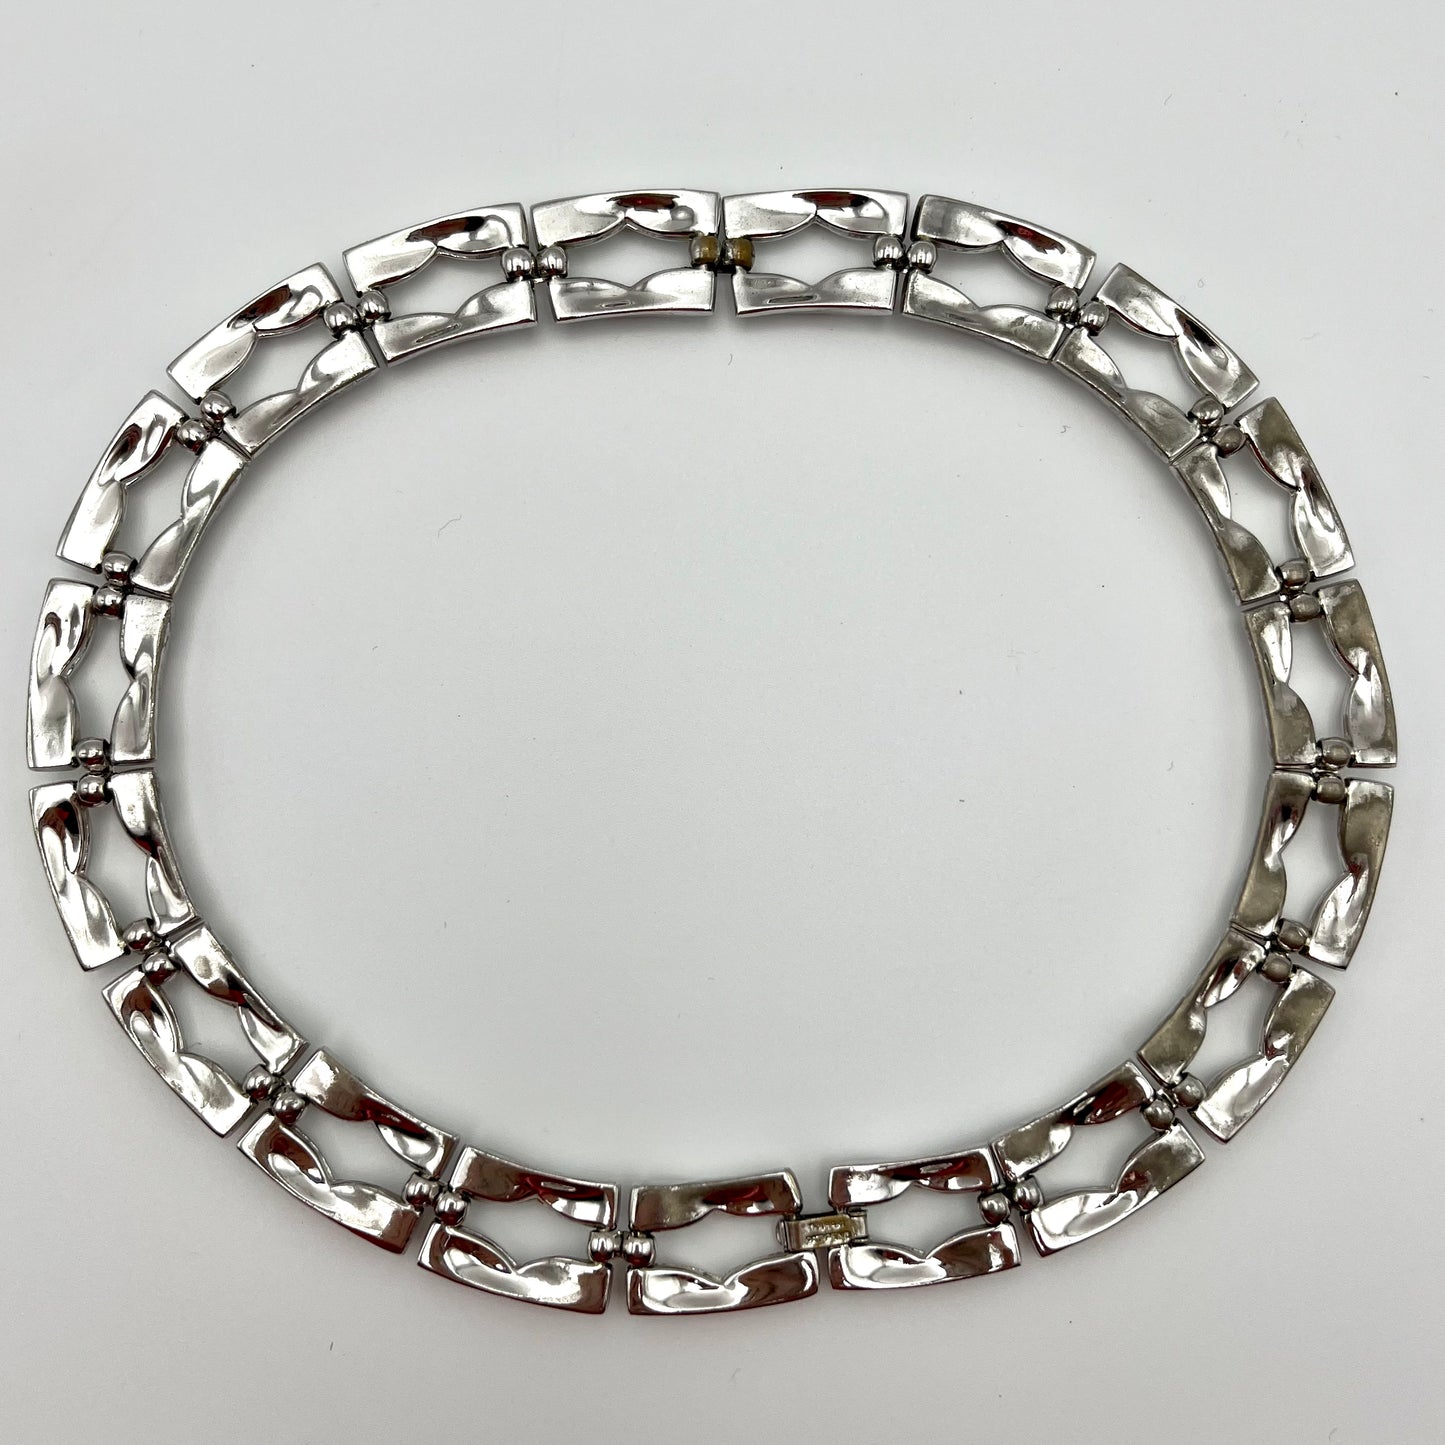 1950s Trifari Patent Pending Choker Necklace